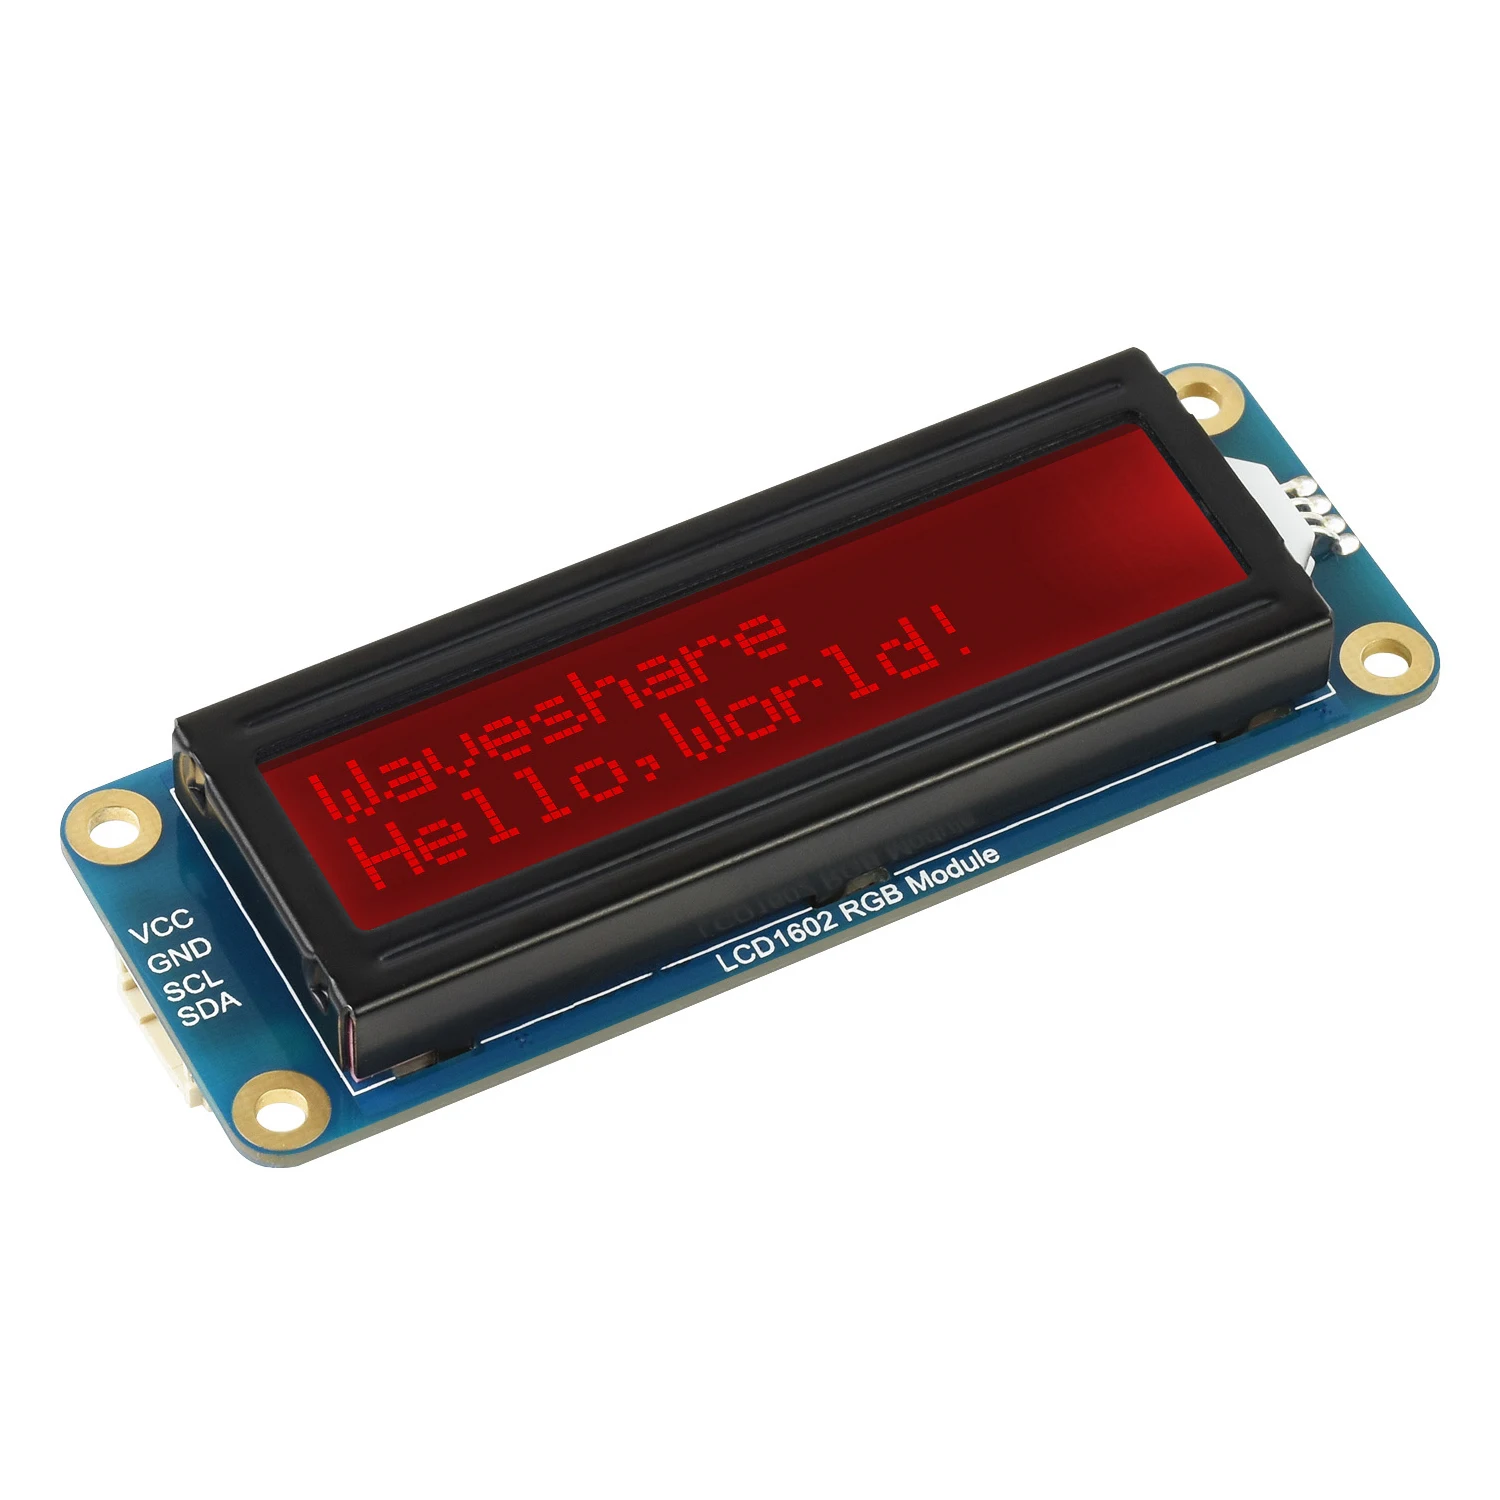 

3.3V 5V LCD1602 RGB LCD Screen Display for RPI Raspberry Pi PICO Zero 2 W WH 3 Model B 4 Board Arduino Jetson Nano Kit B01